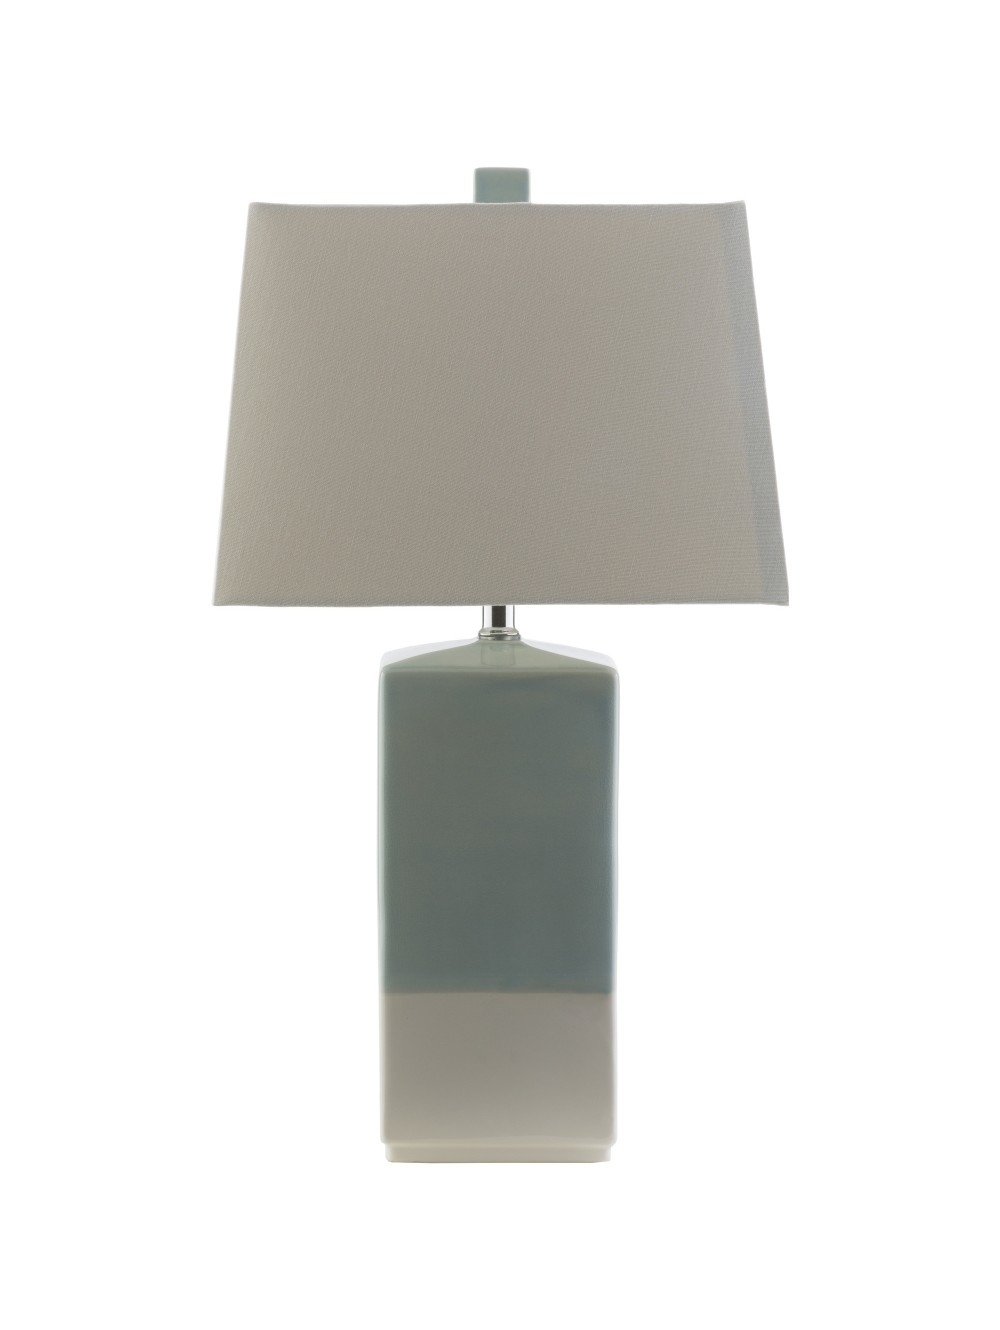 SEAWALL TABLE LAMP, BLUE - Image 0